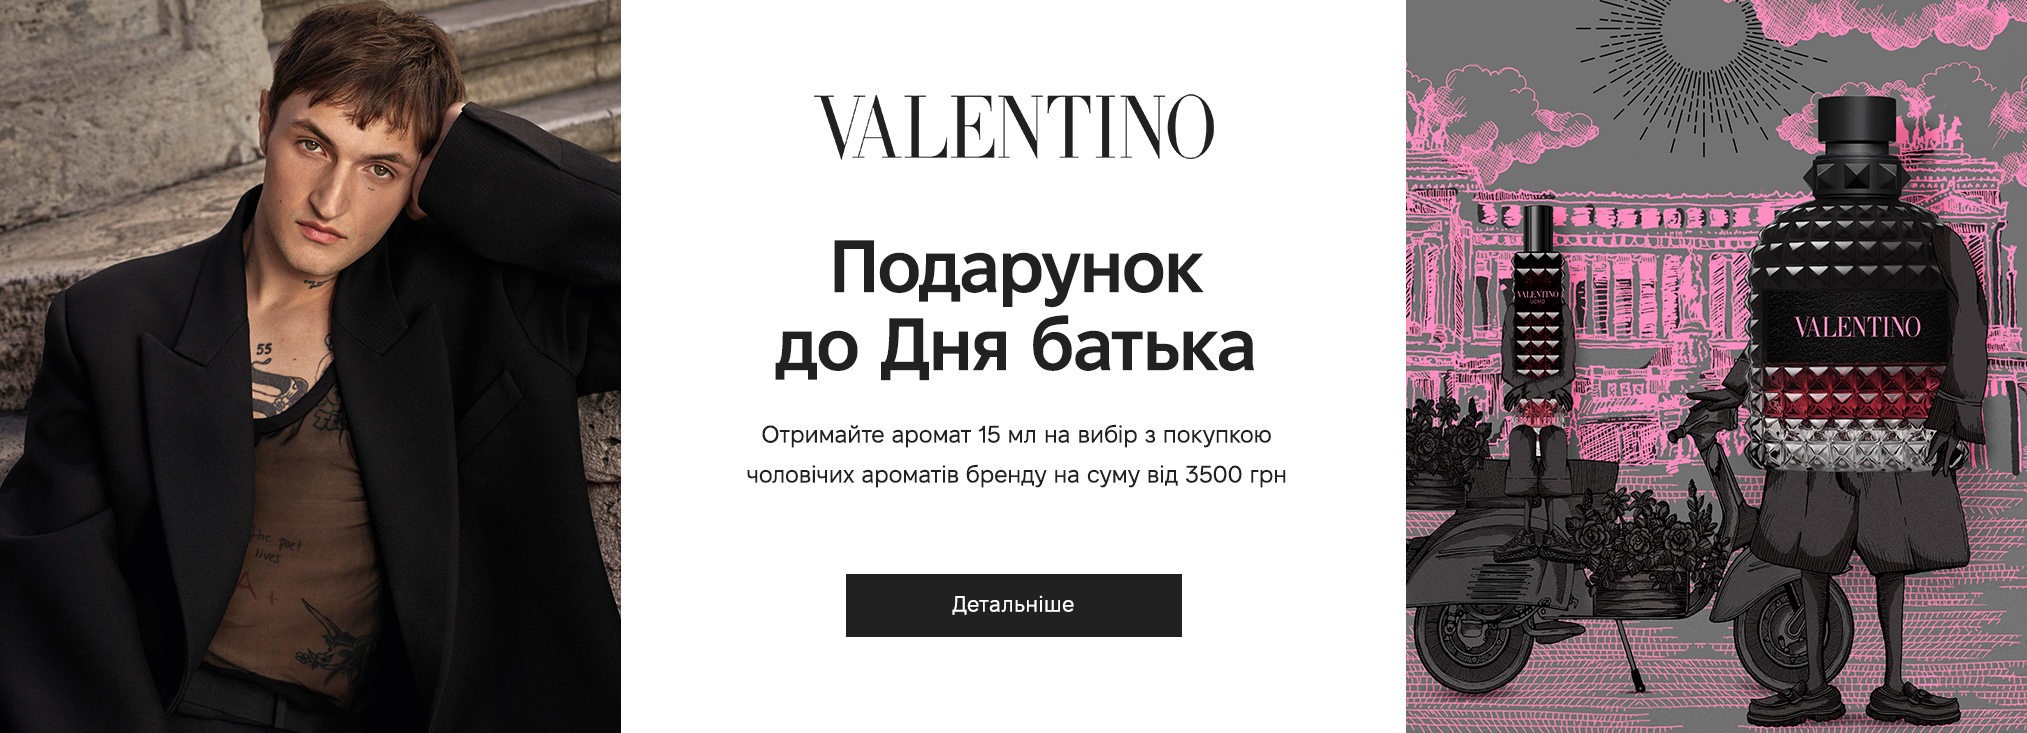 Valentino_3